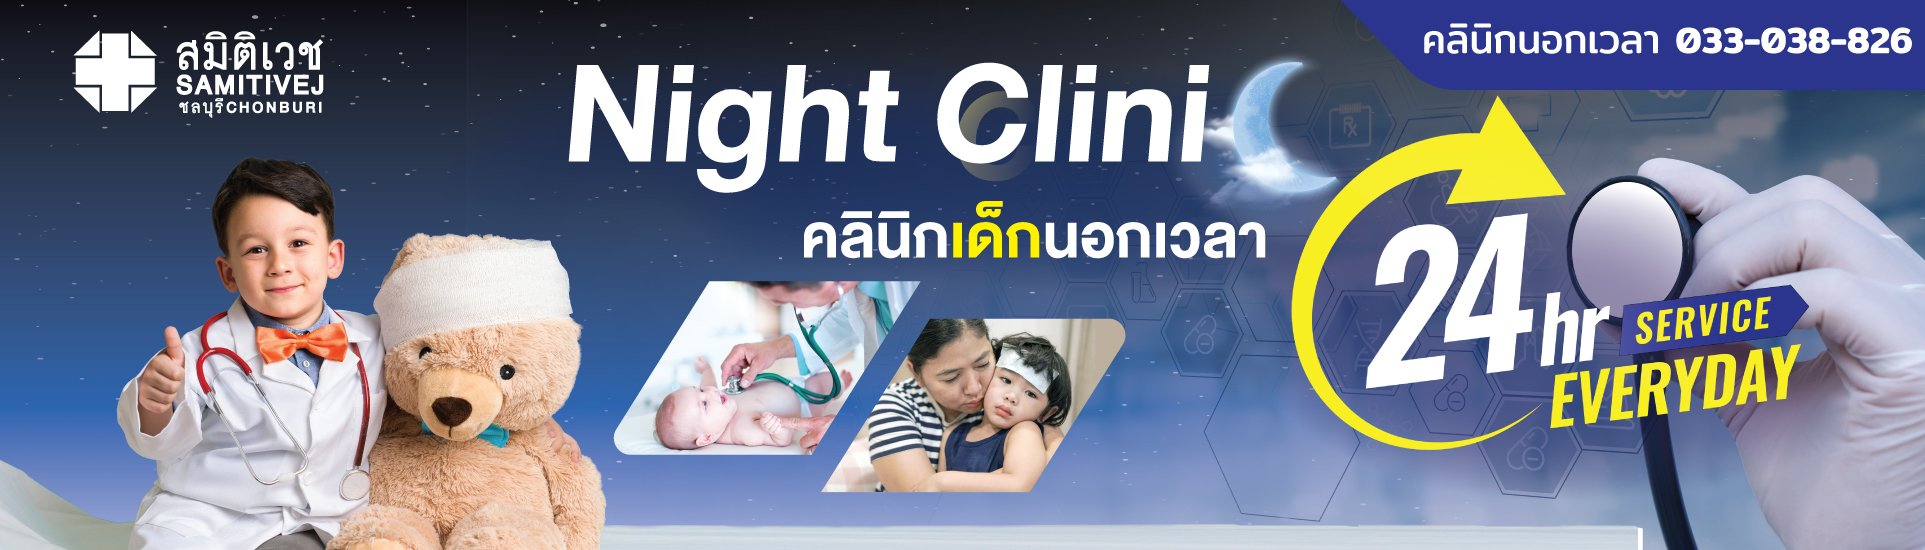 PED Night Clinic-samitivejchonburi-slide